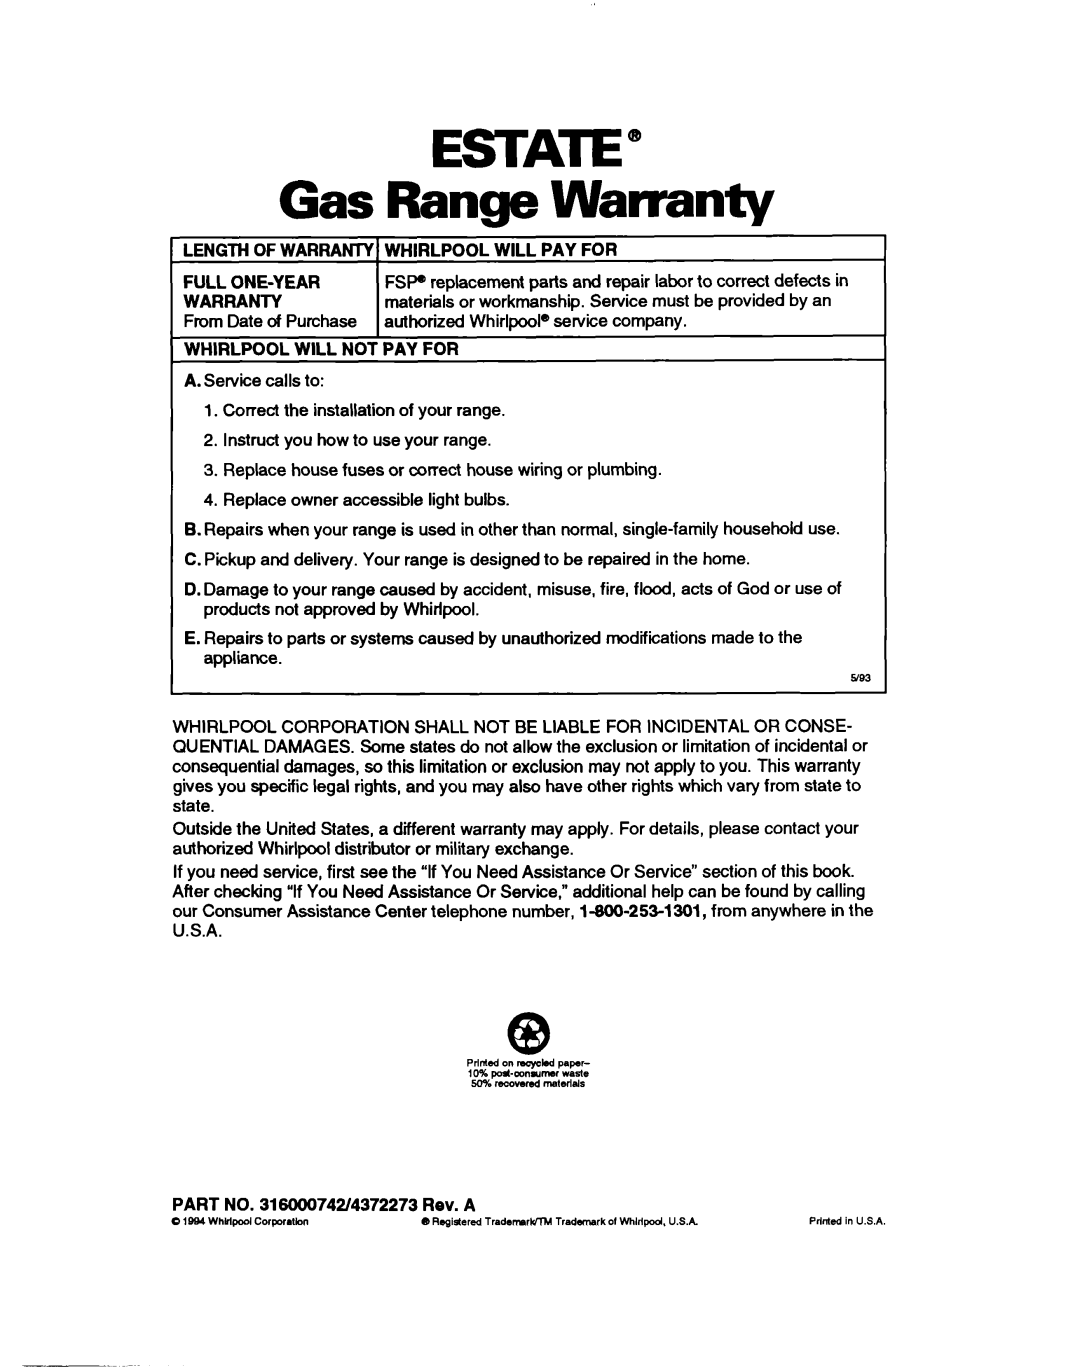 Whirlpool TGR88W2B manual ESTATE” Gas Range Warranty, Length Of Warranty Whirlpool Will Pay For, Whirlpool Will Not Pay For 